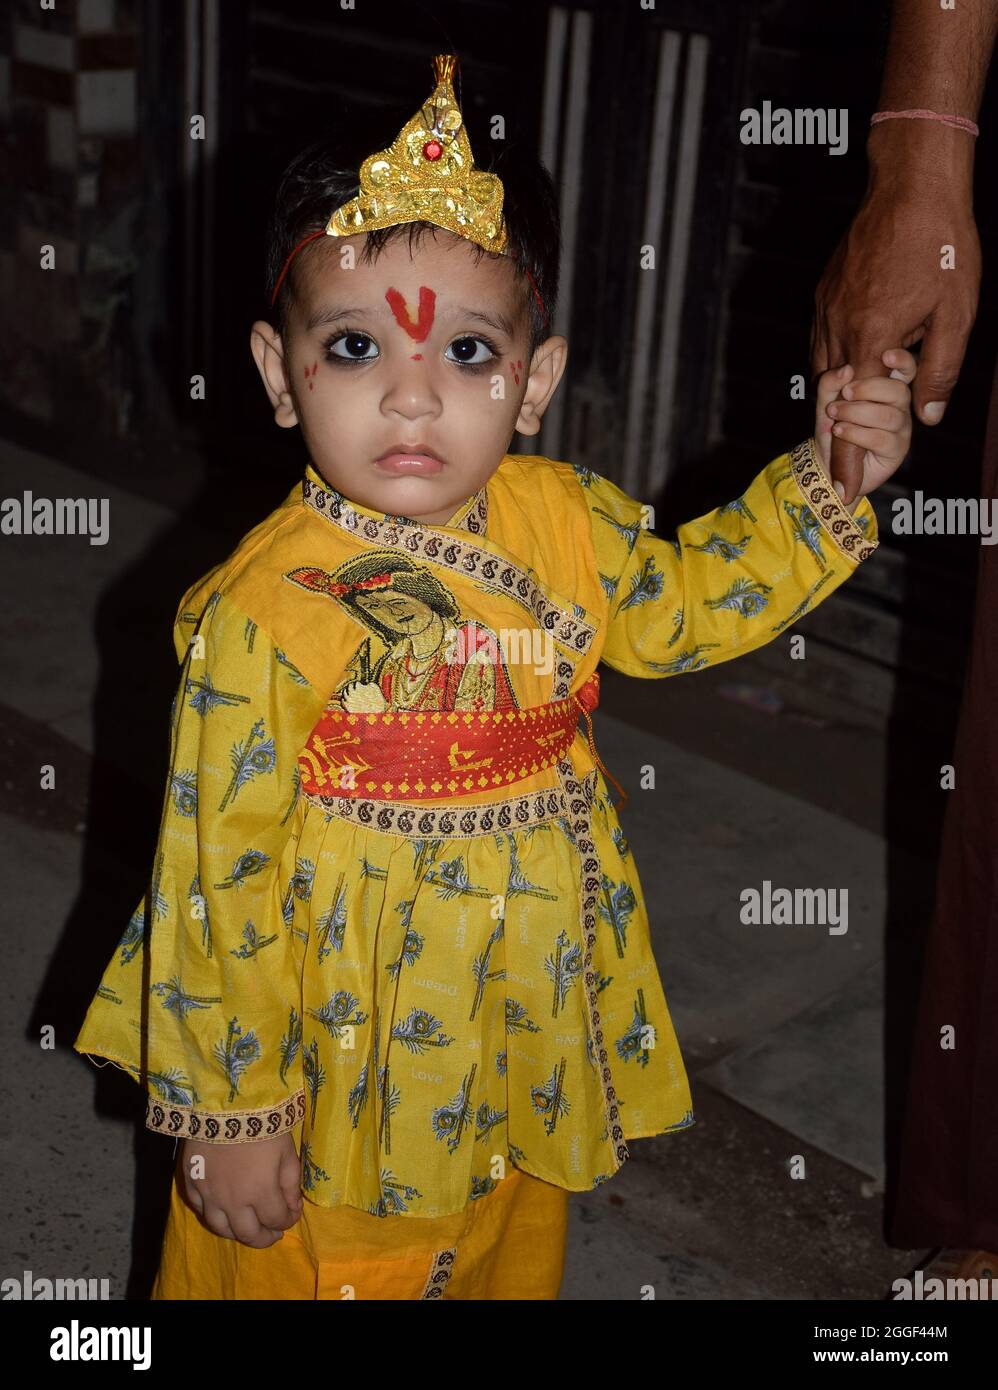 Indian child dressed as baby Krishna on occasion of Janmashtami ...